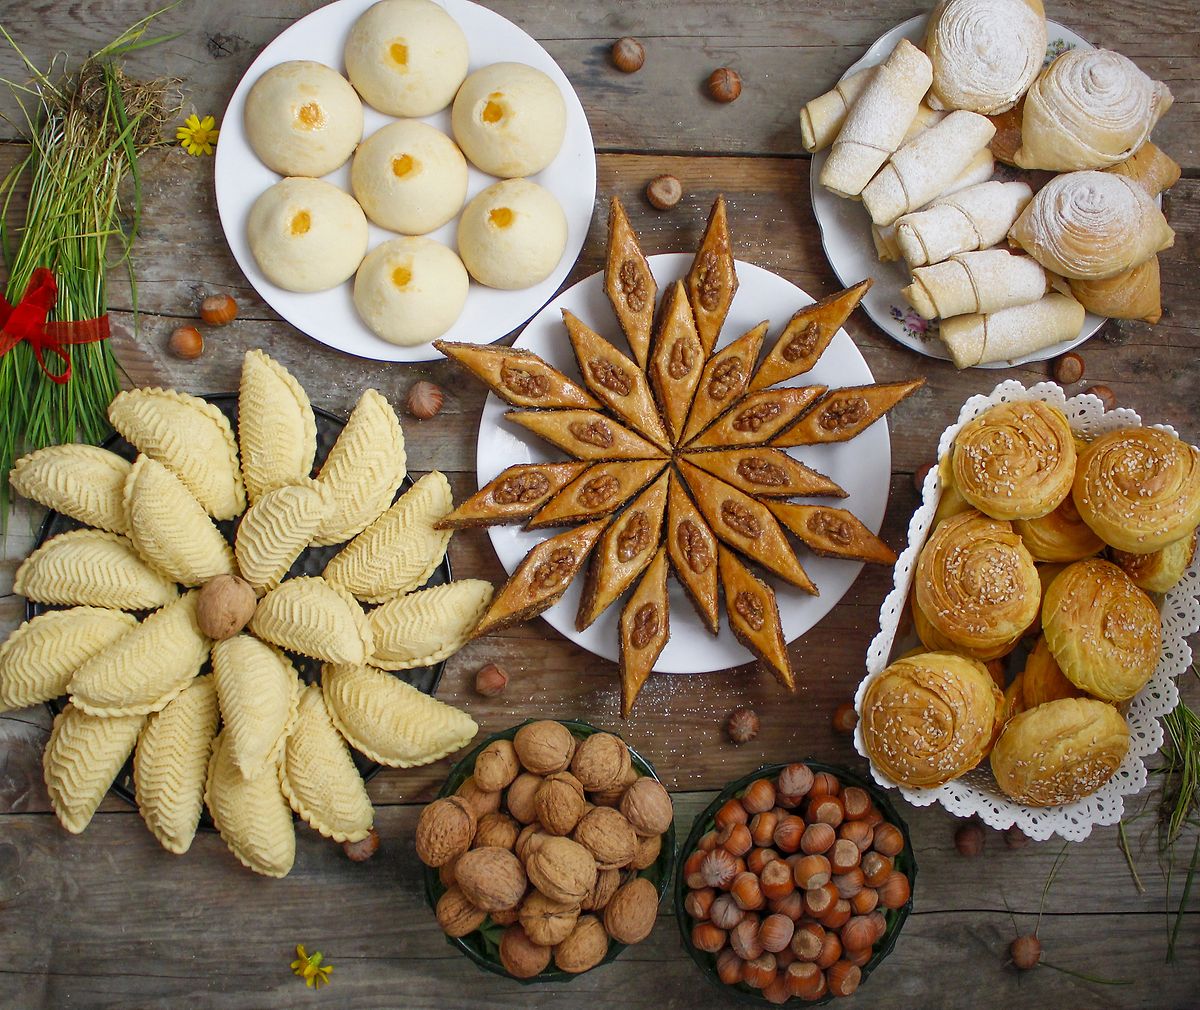 Traditional Azerbaijani pastries served for Nowruz